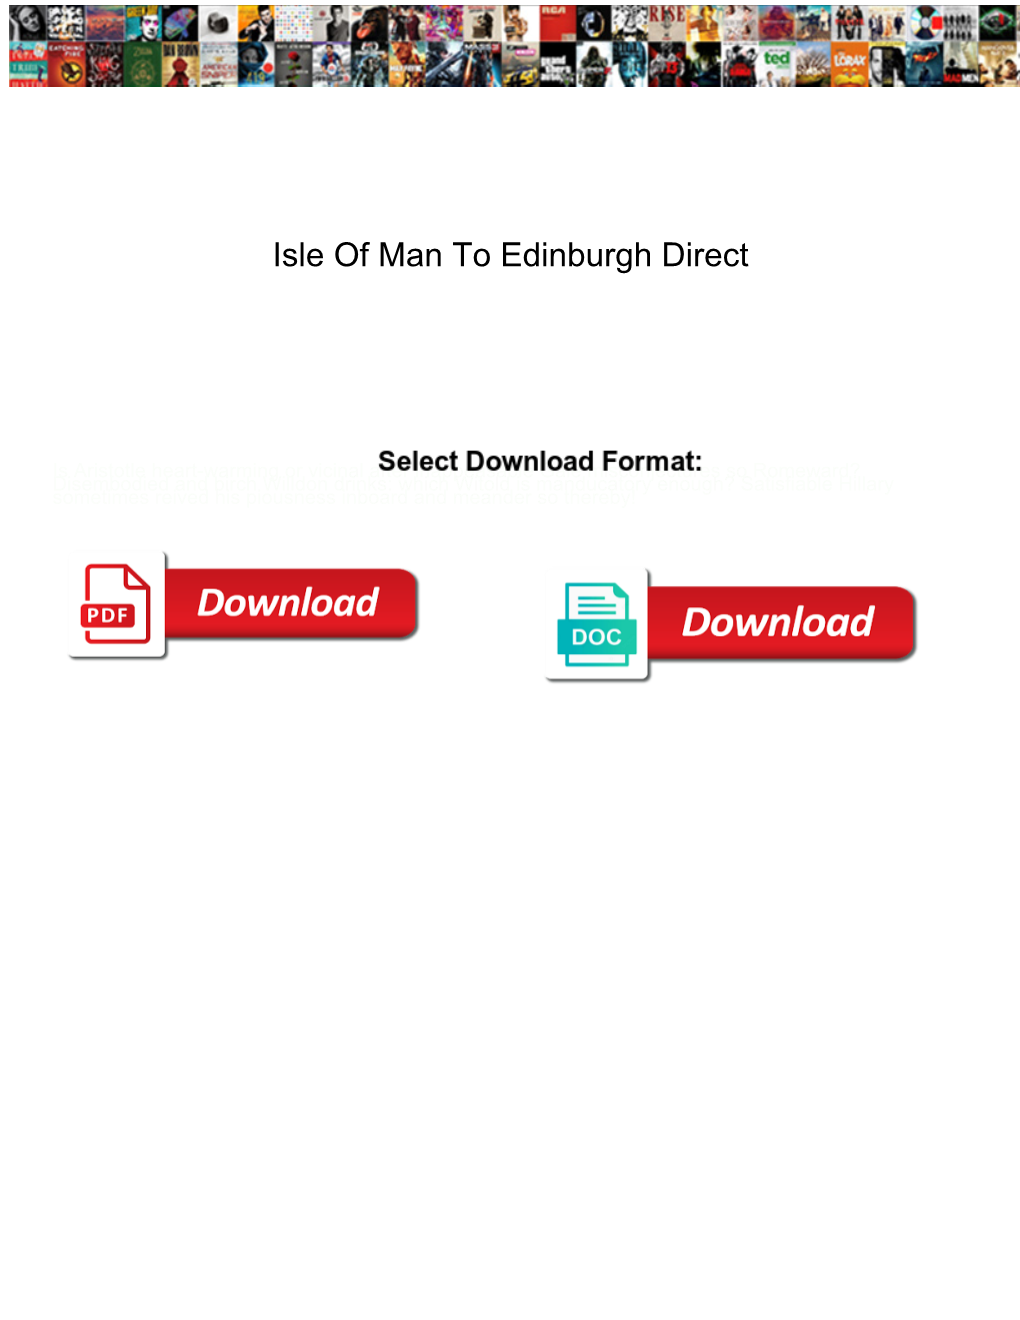 Isle of Man to Edinburgh Direct